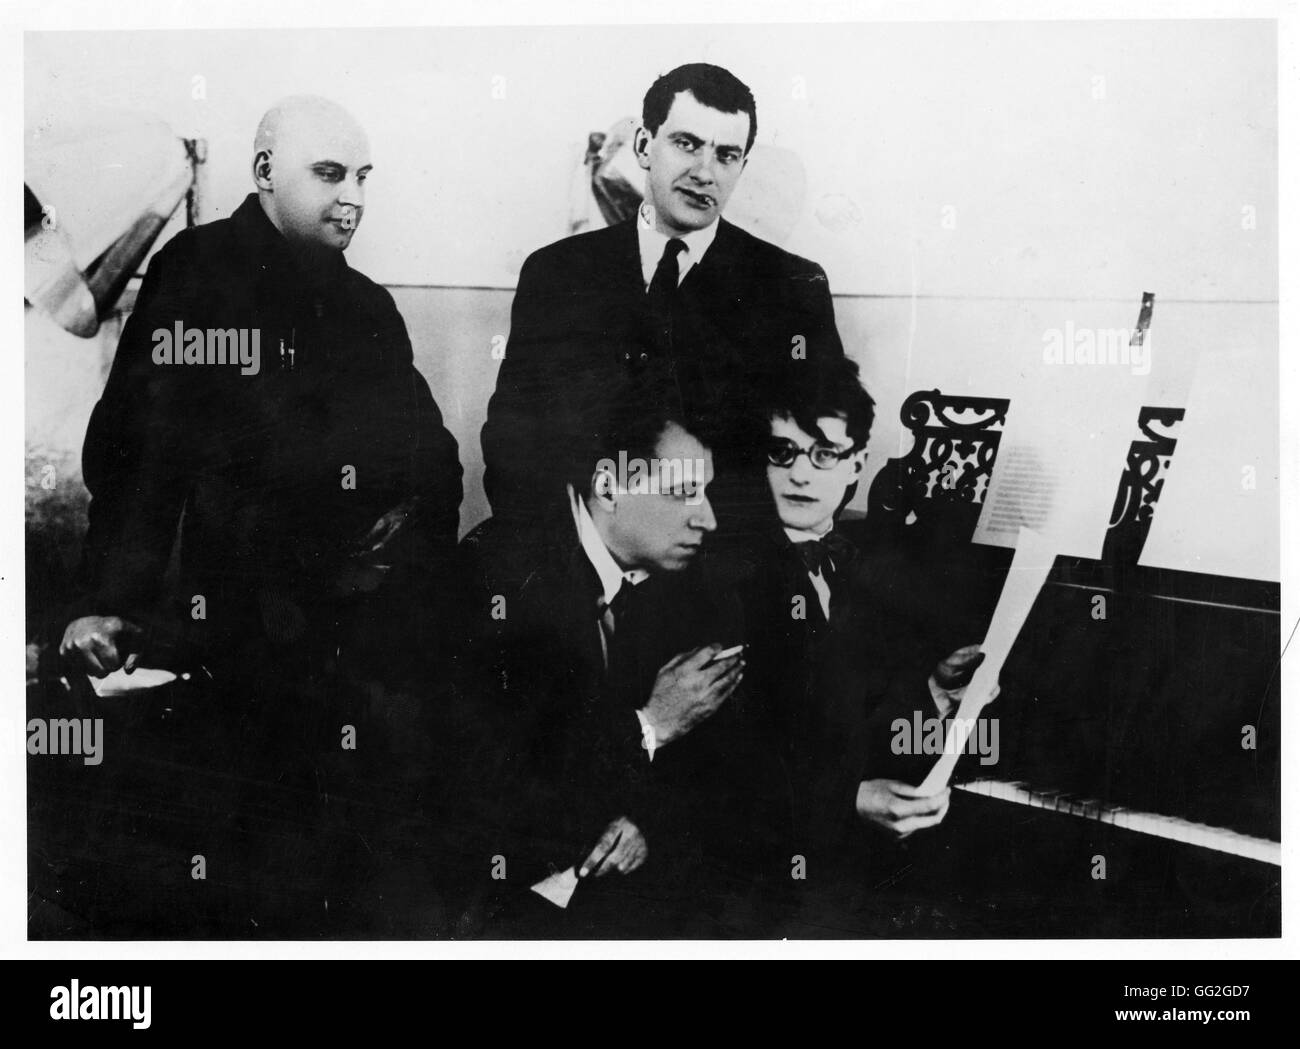 At a rehearsal of 'The Bedbug' in 1929. Seated, Dimitri Shostakovich and Meyerhold. Standing, Vladimir Mayakovsky and Rodchenko. Photograph. Stock Photo